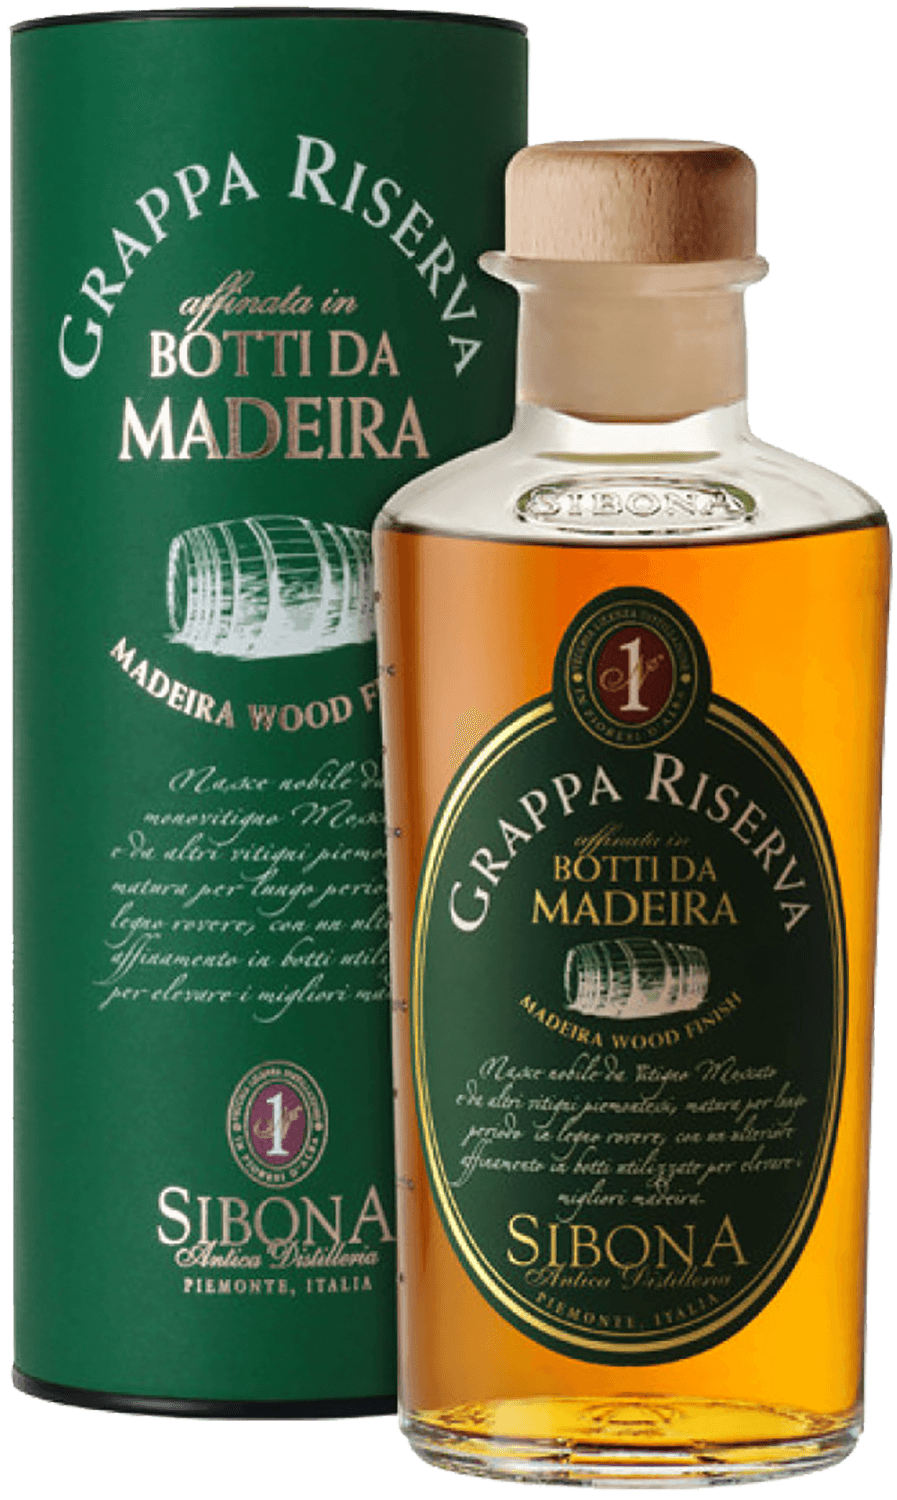 Sibona Grappa Riserva Madeira Wood Finish (gift box)